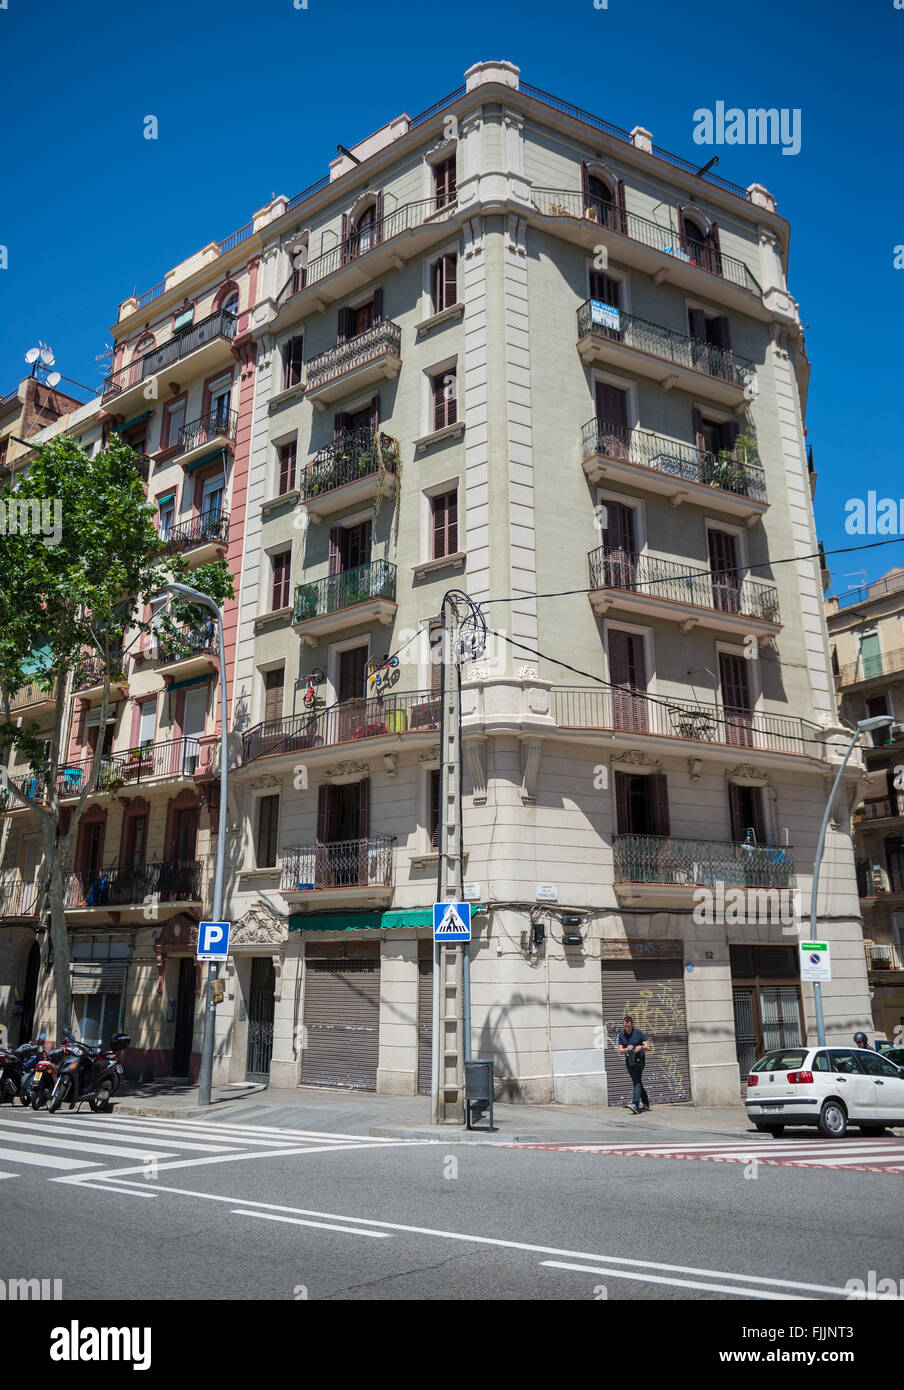 Apartment house at Carrer de Lleida street in El Poble-sec neighborhood in Sants-Montjuic district of Barcelona, Spain Stock Photo